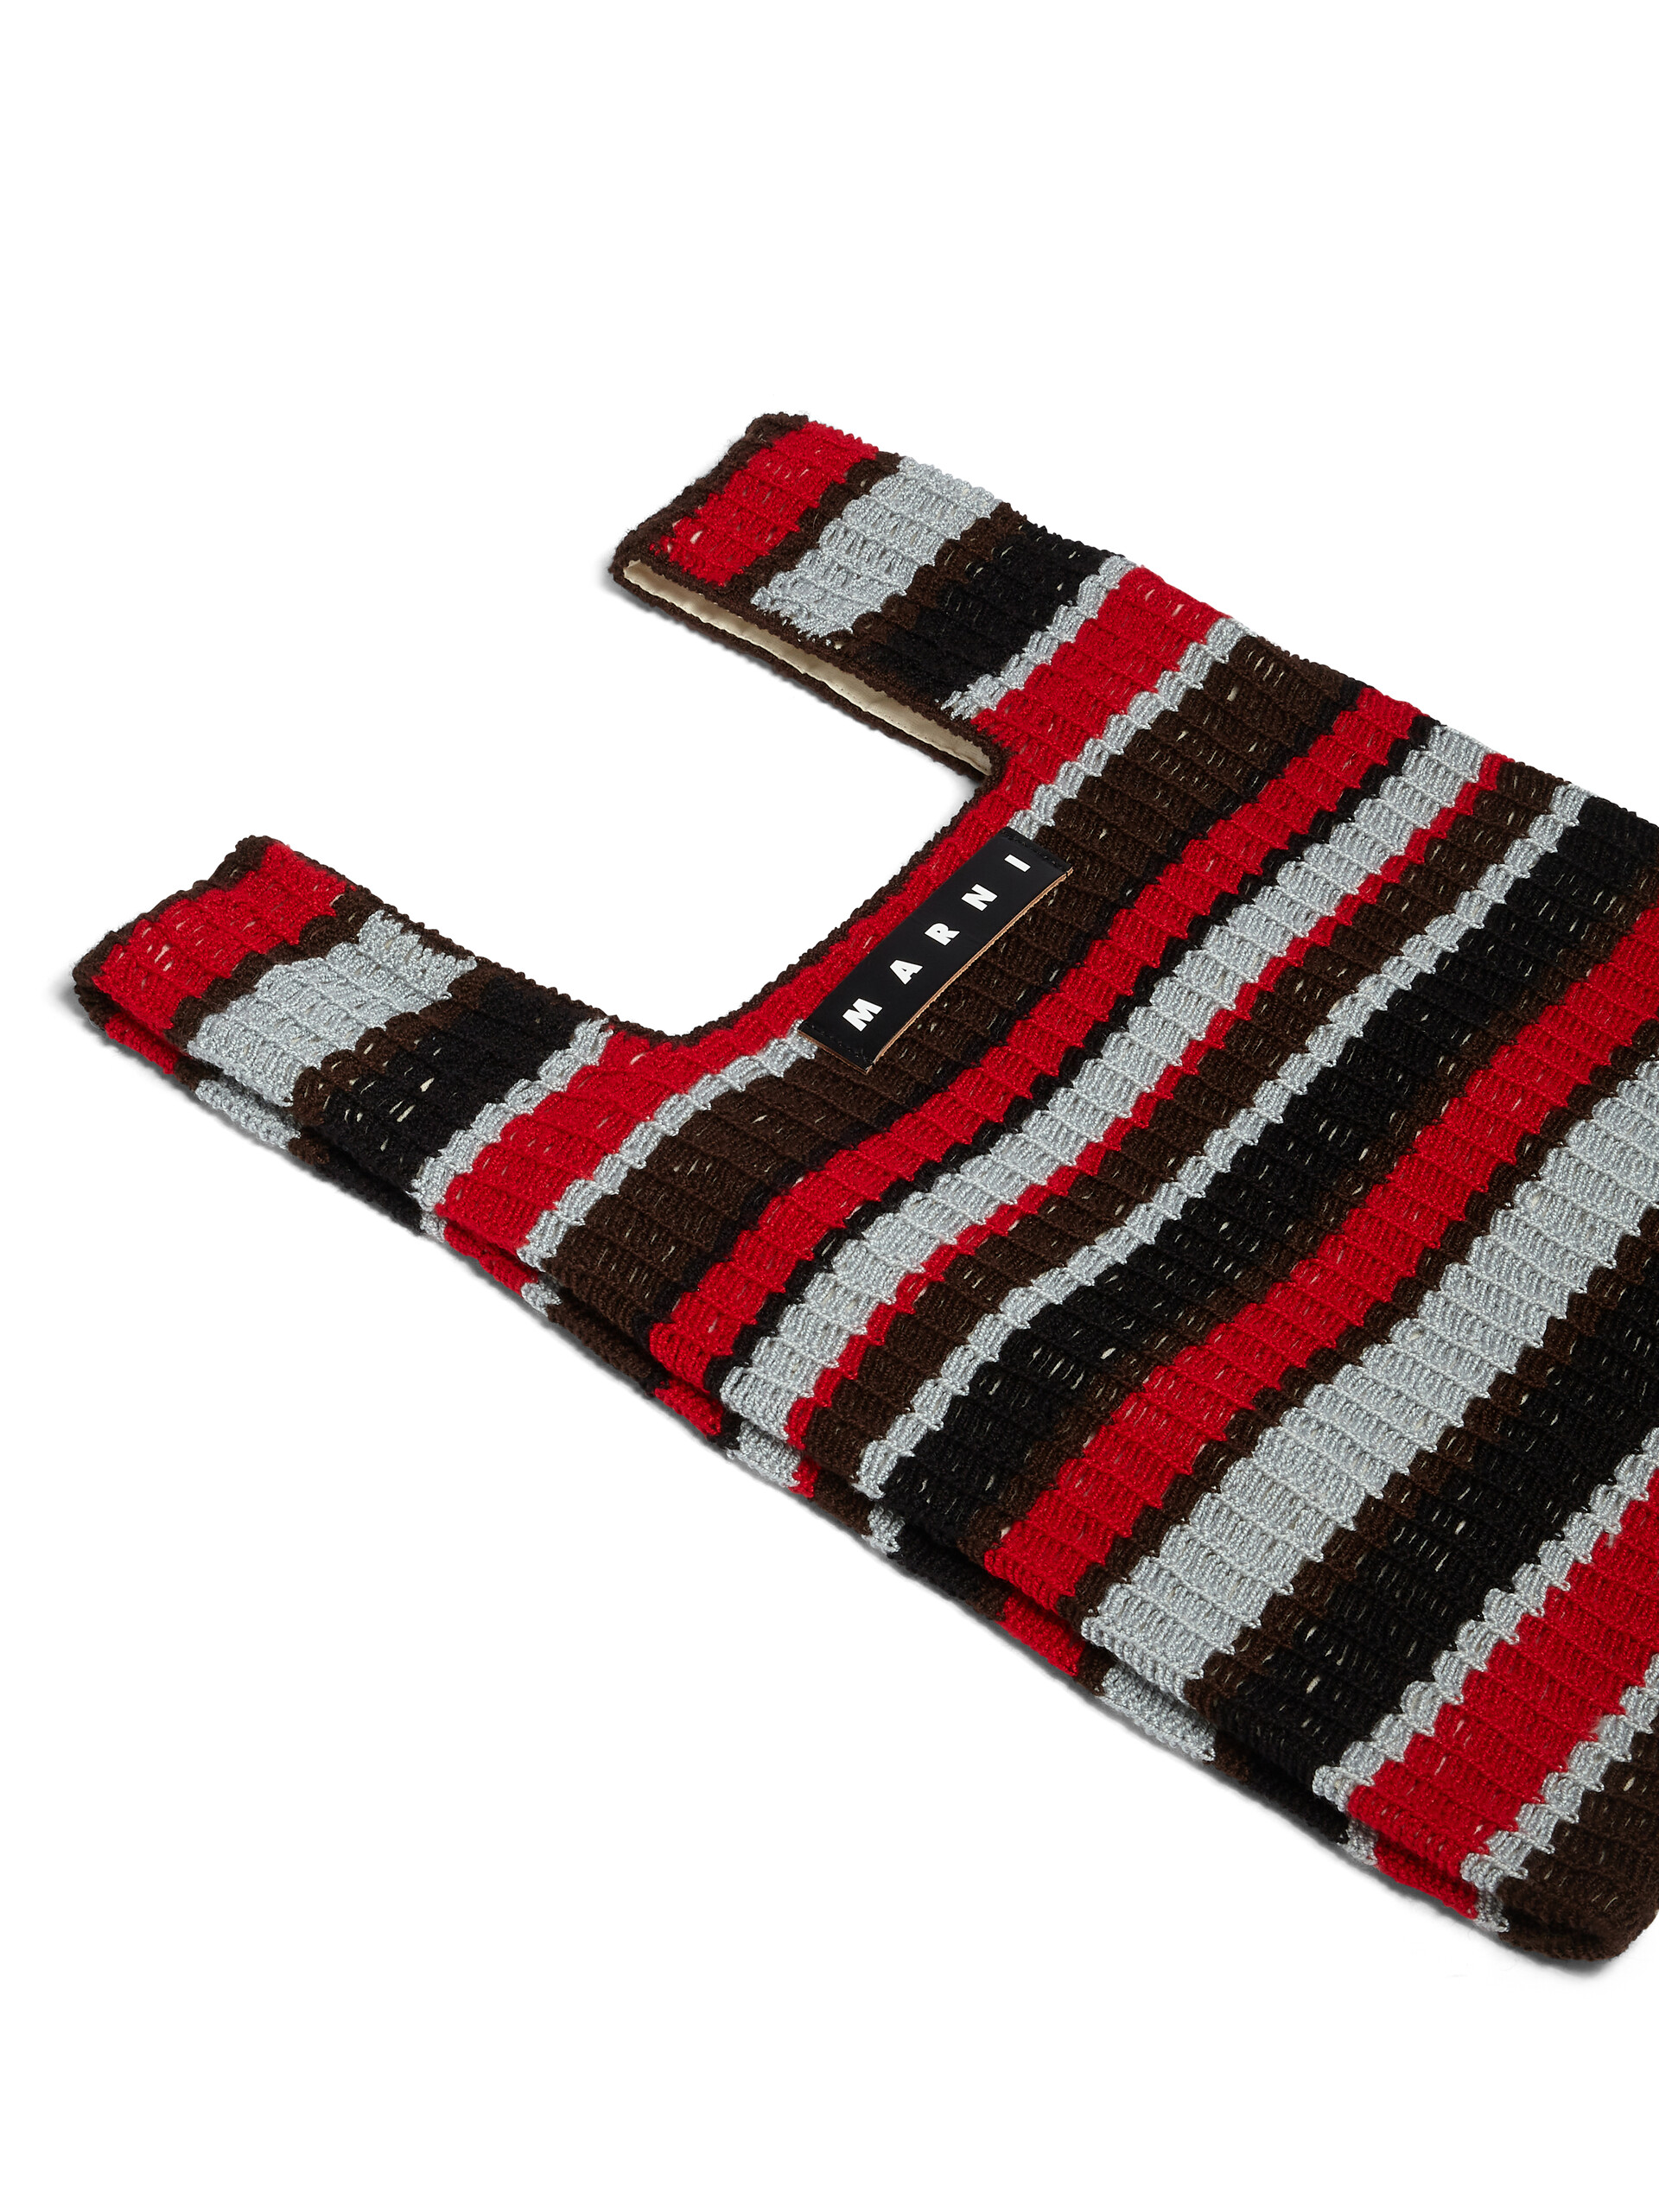 MARNI MARKET FISH bag in multicolor red crochet - Bags - Image 4